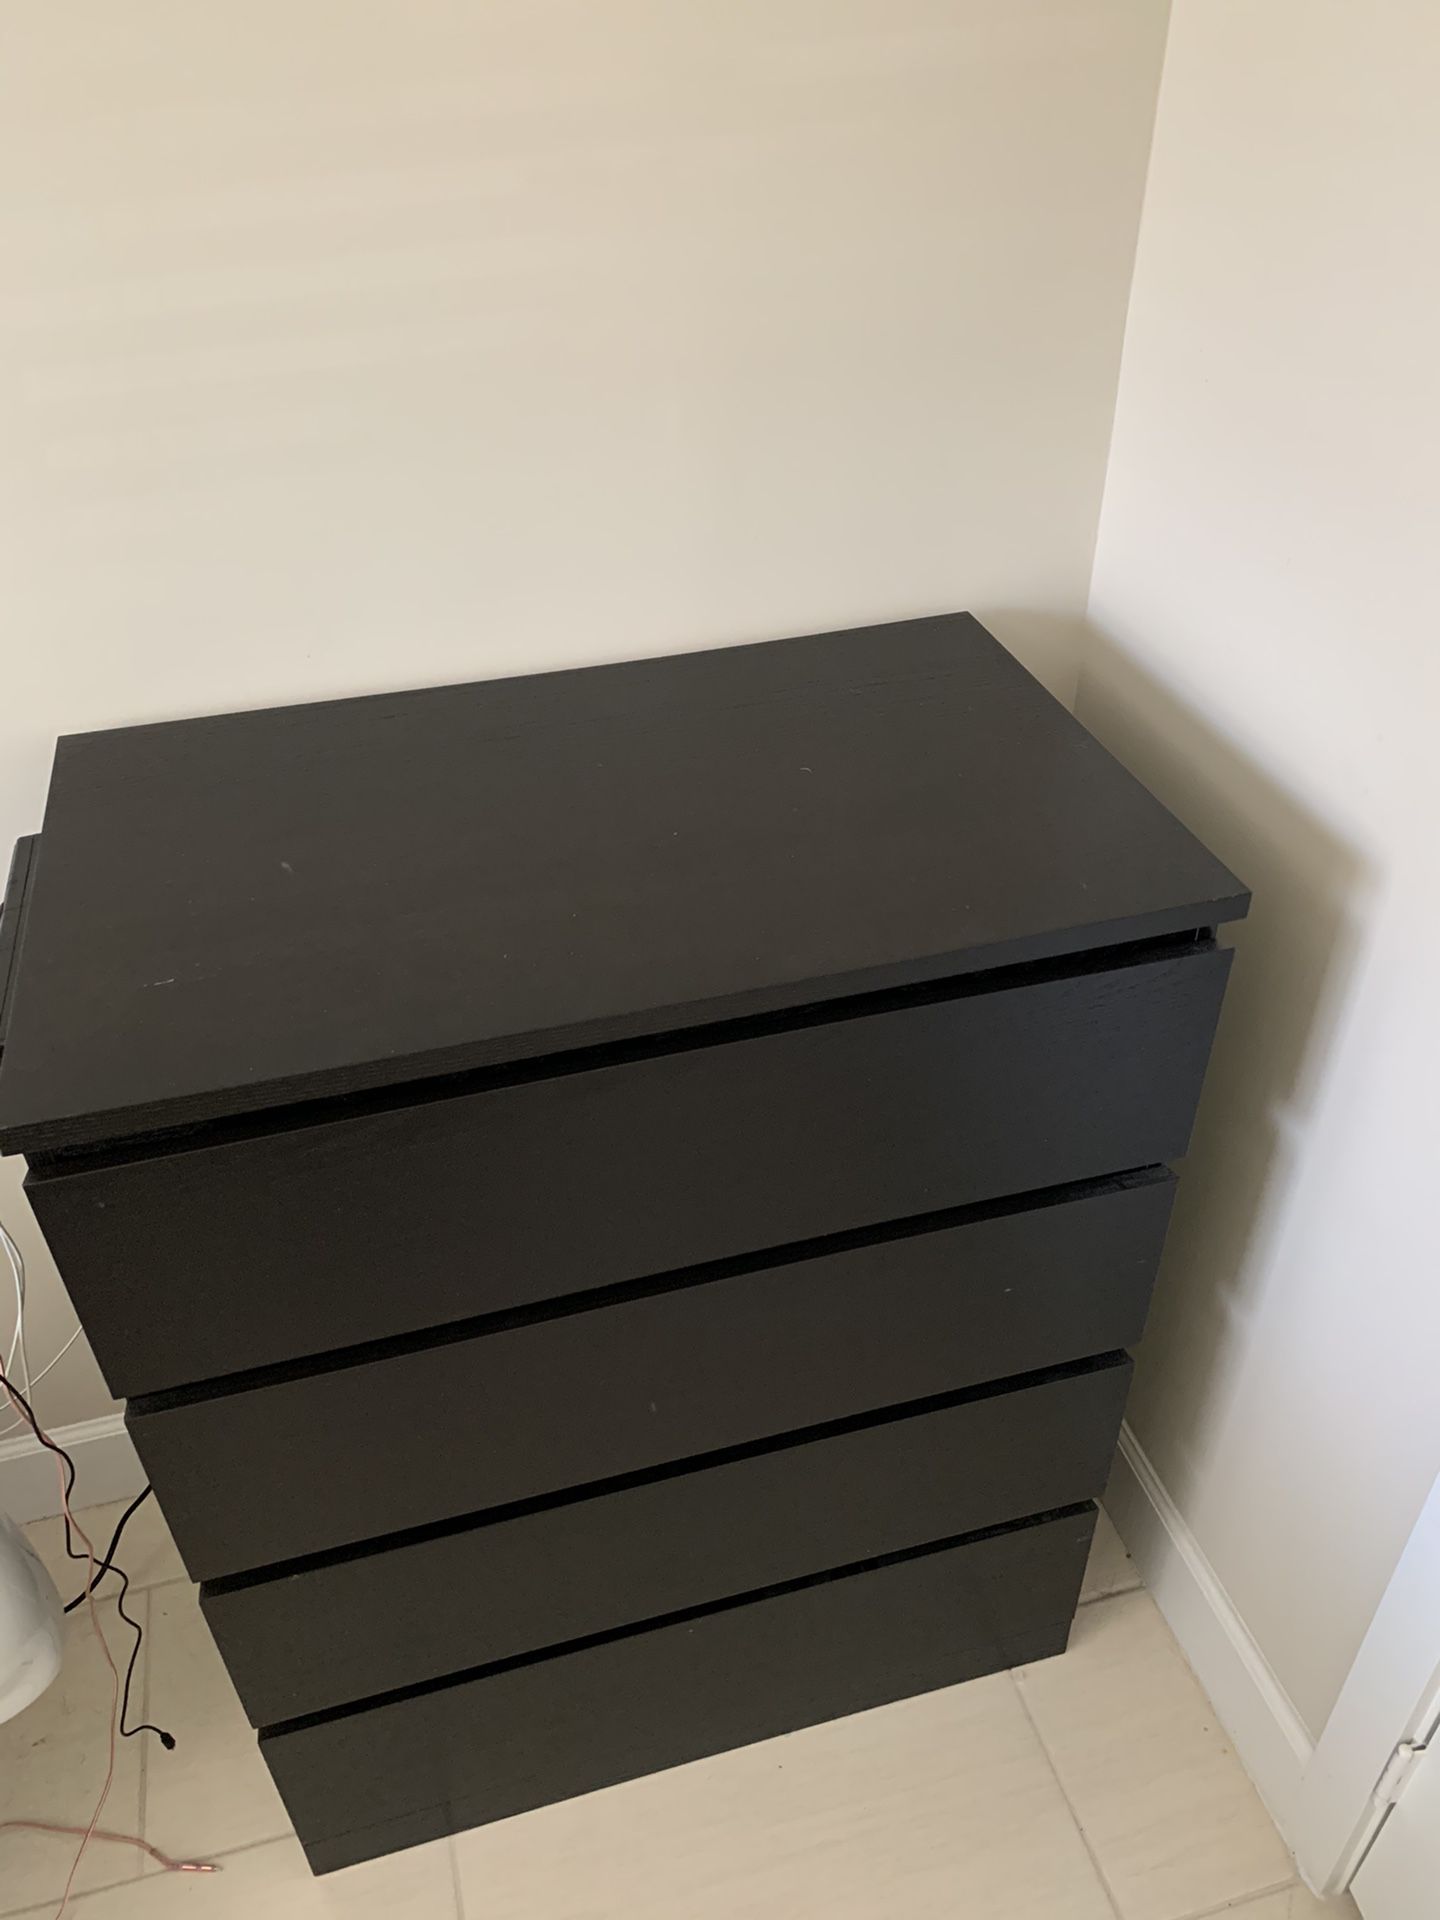 Black 4 Drawer Dresser